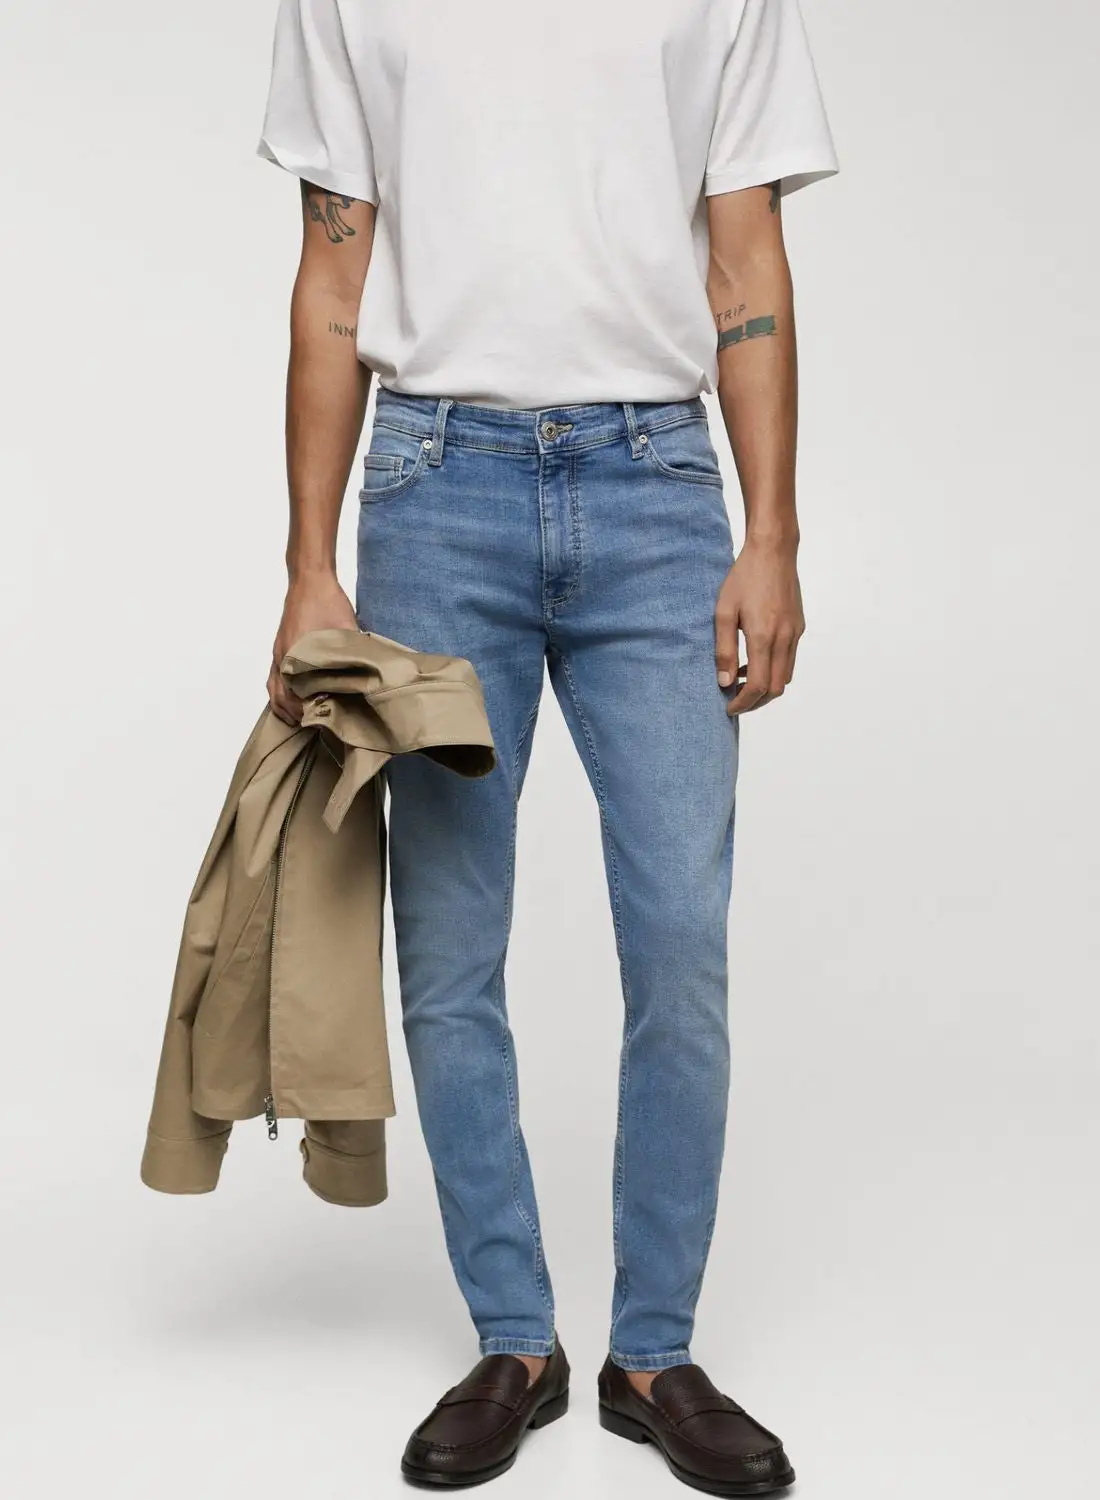 Mango Man Jude Skinny Fit Jeans